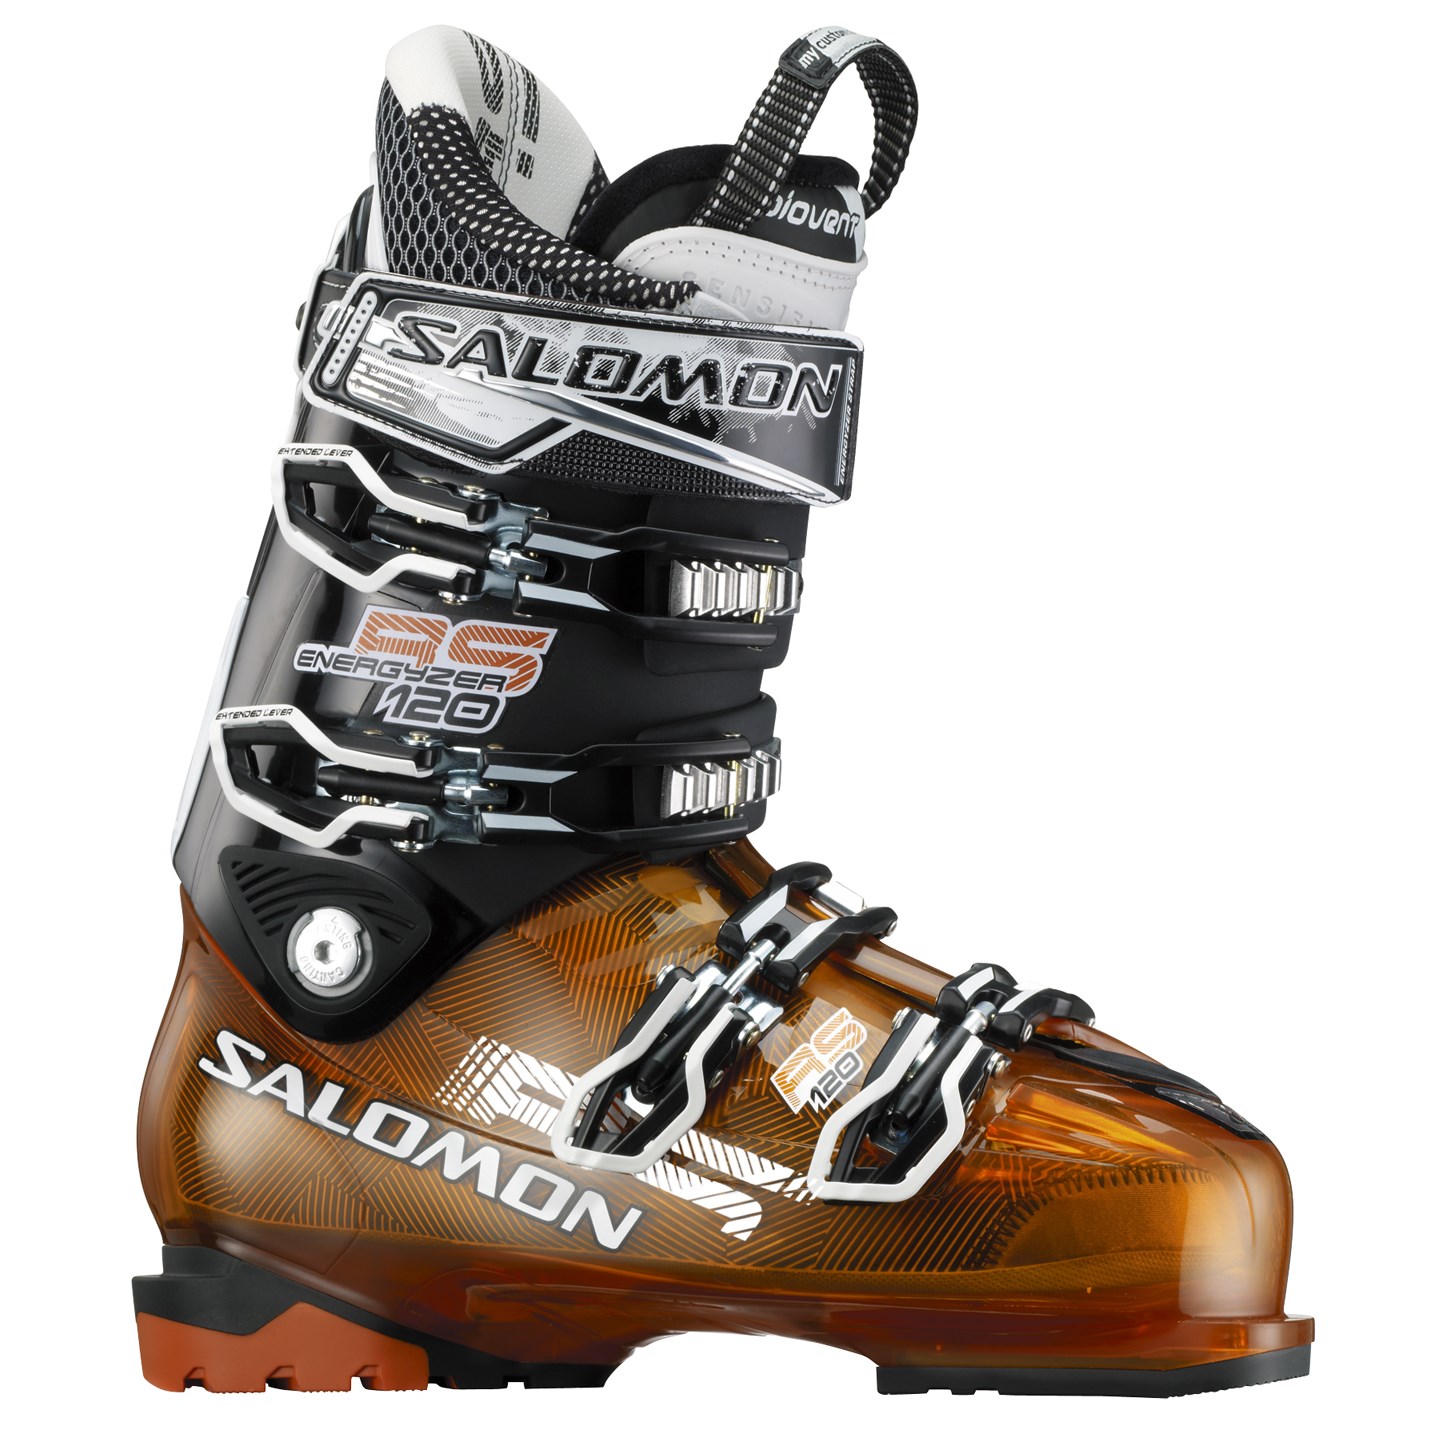 Salomon RS 120 Ski Boots 2013 | evo